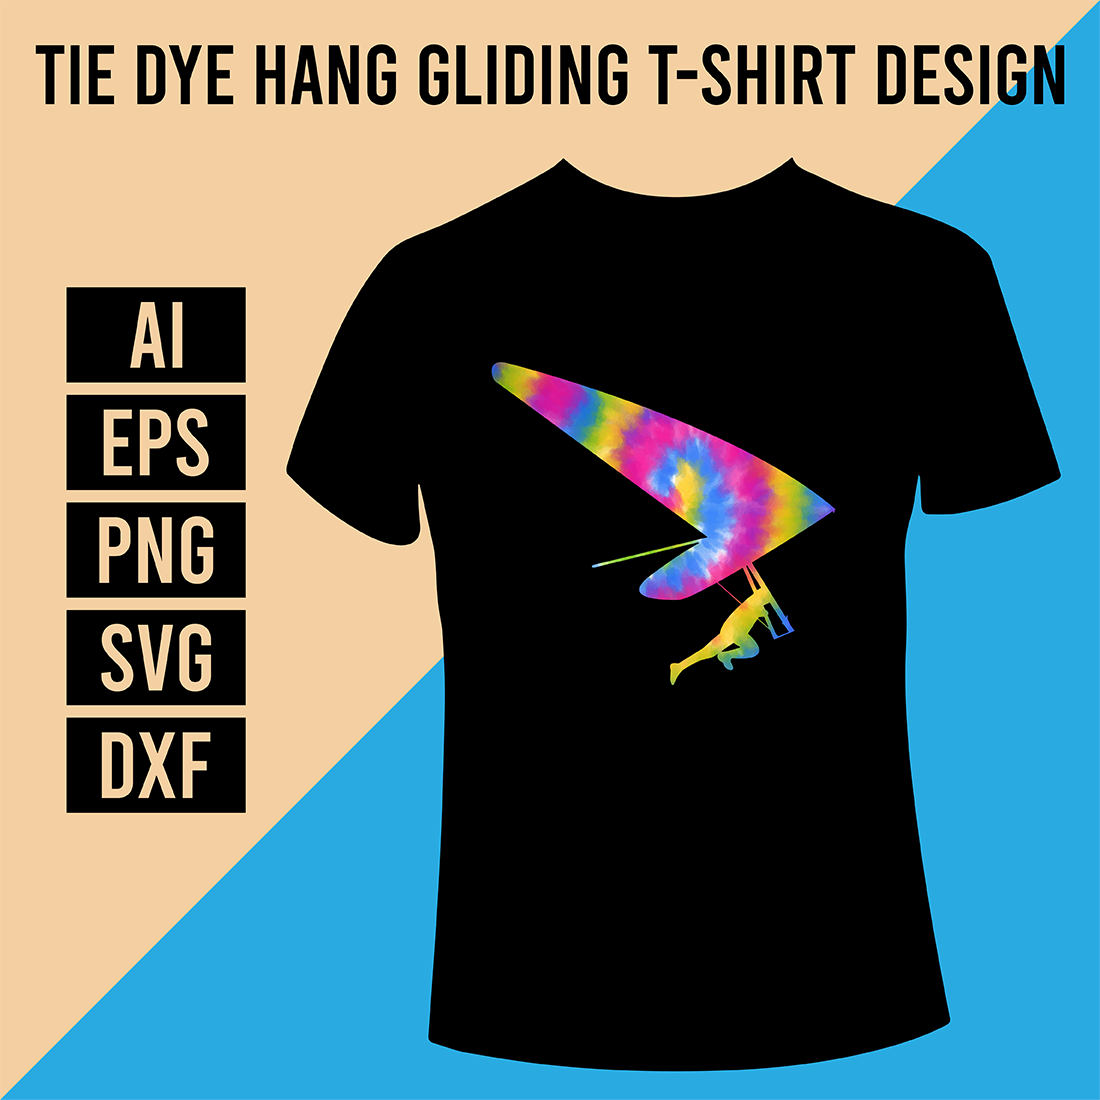 Hanging t-shirt logo template. Hanger and black t shirt vector